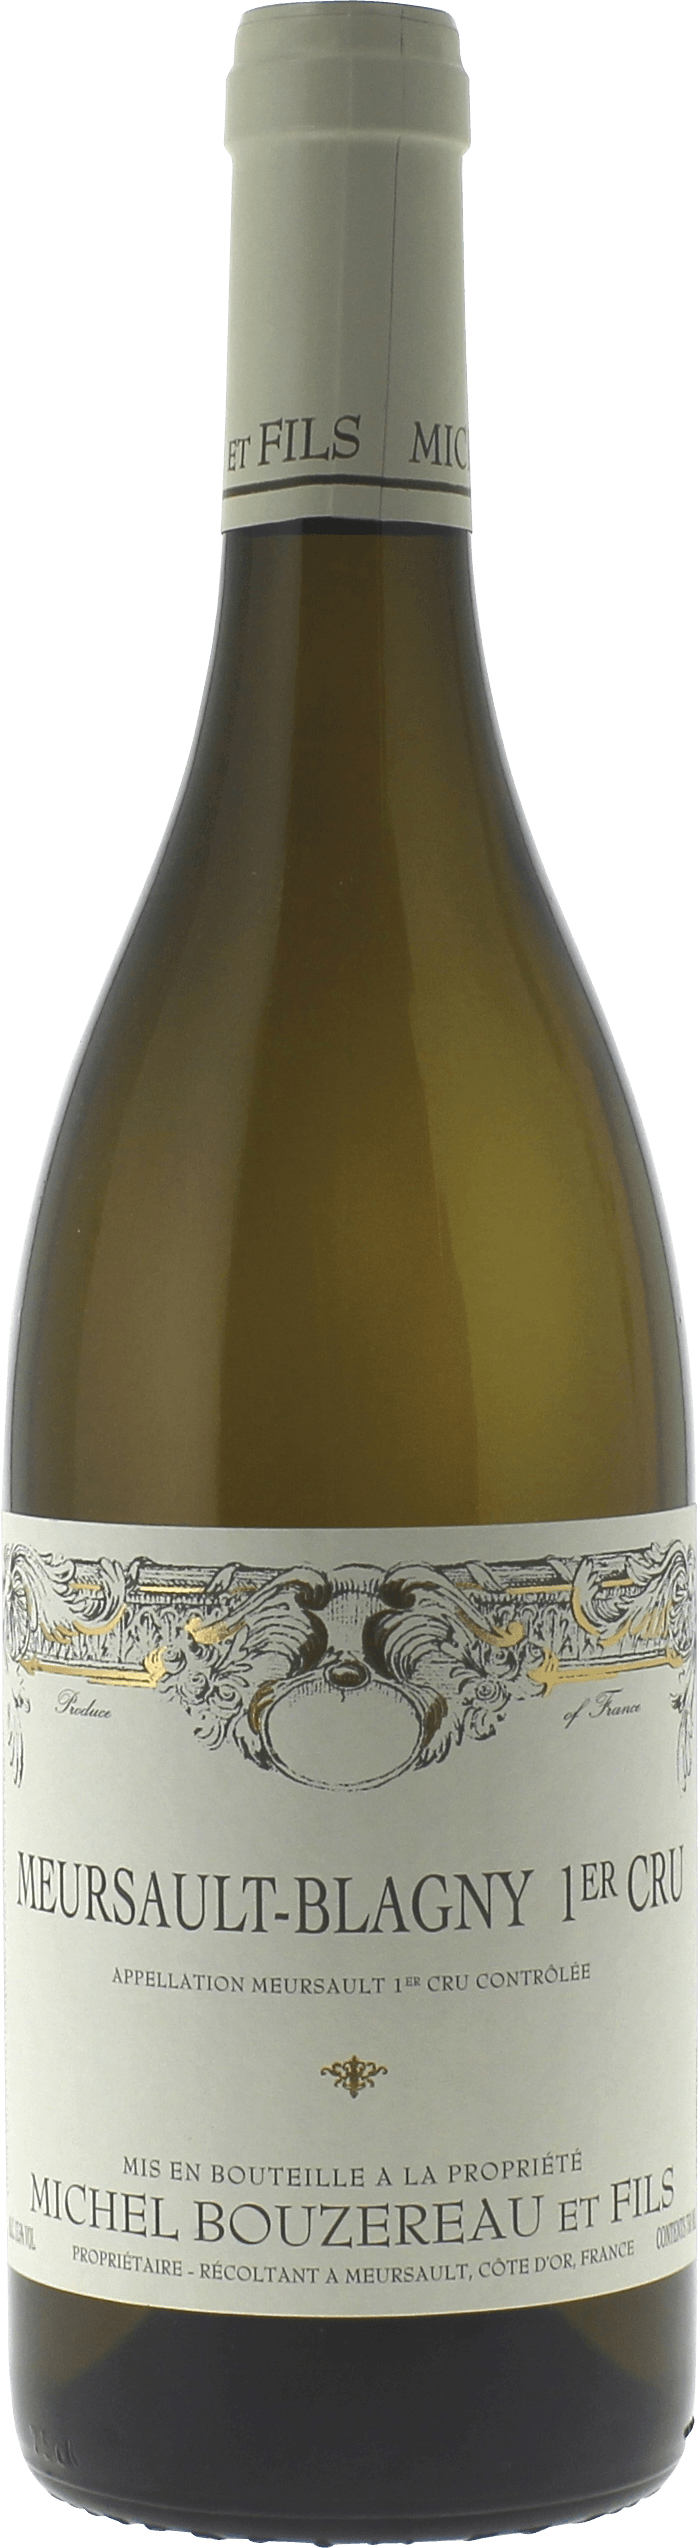 Meursault blagny 1er cru 2017 Domaine BOUZEREAU Michel et fils, Bourgogne blanc